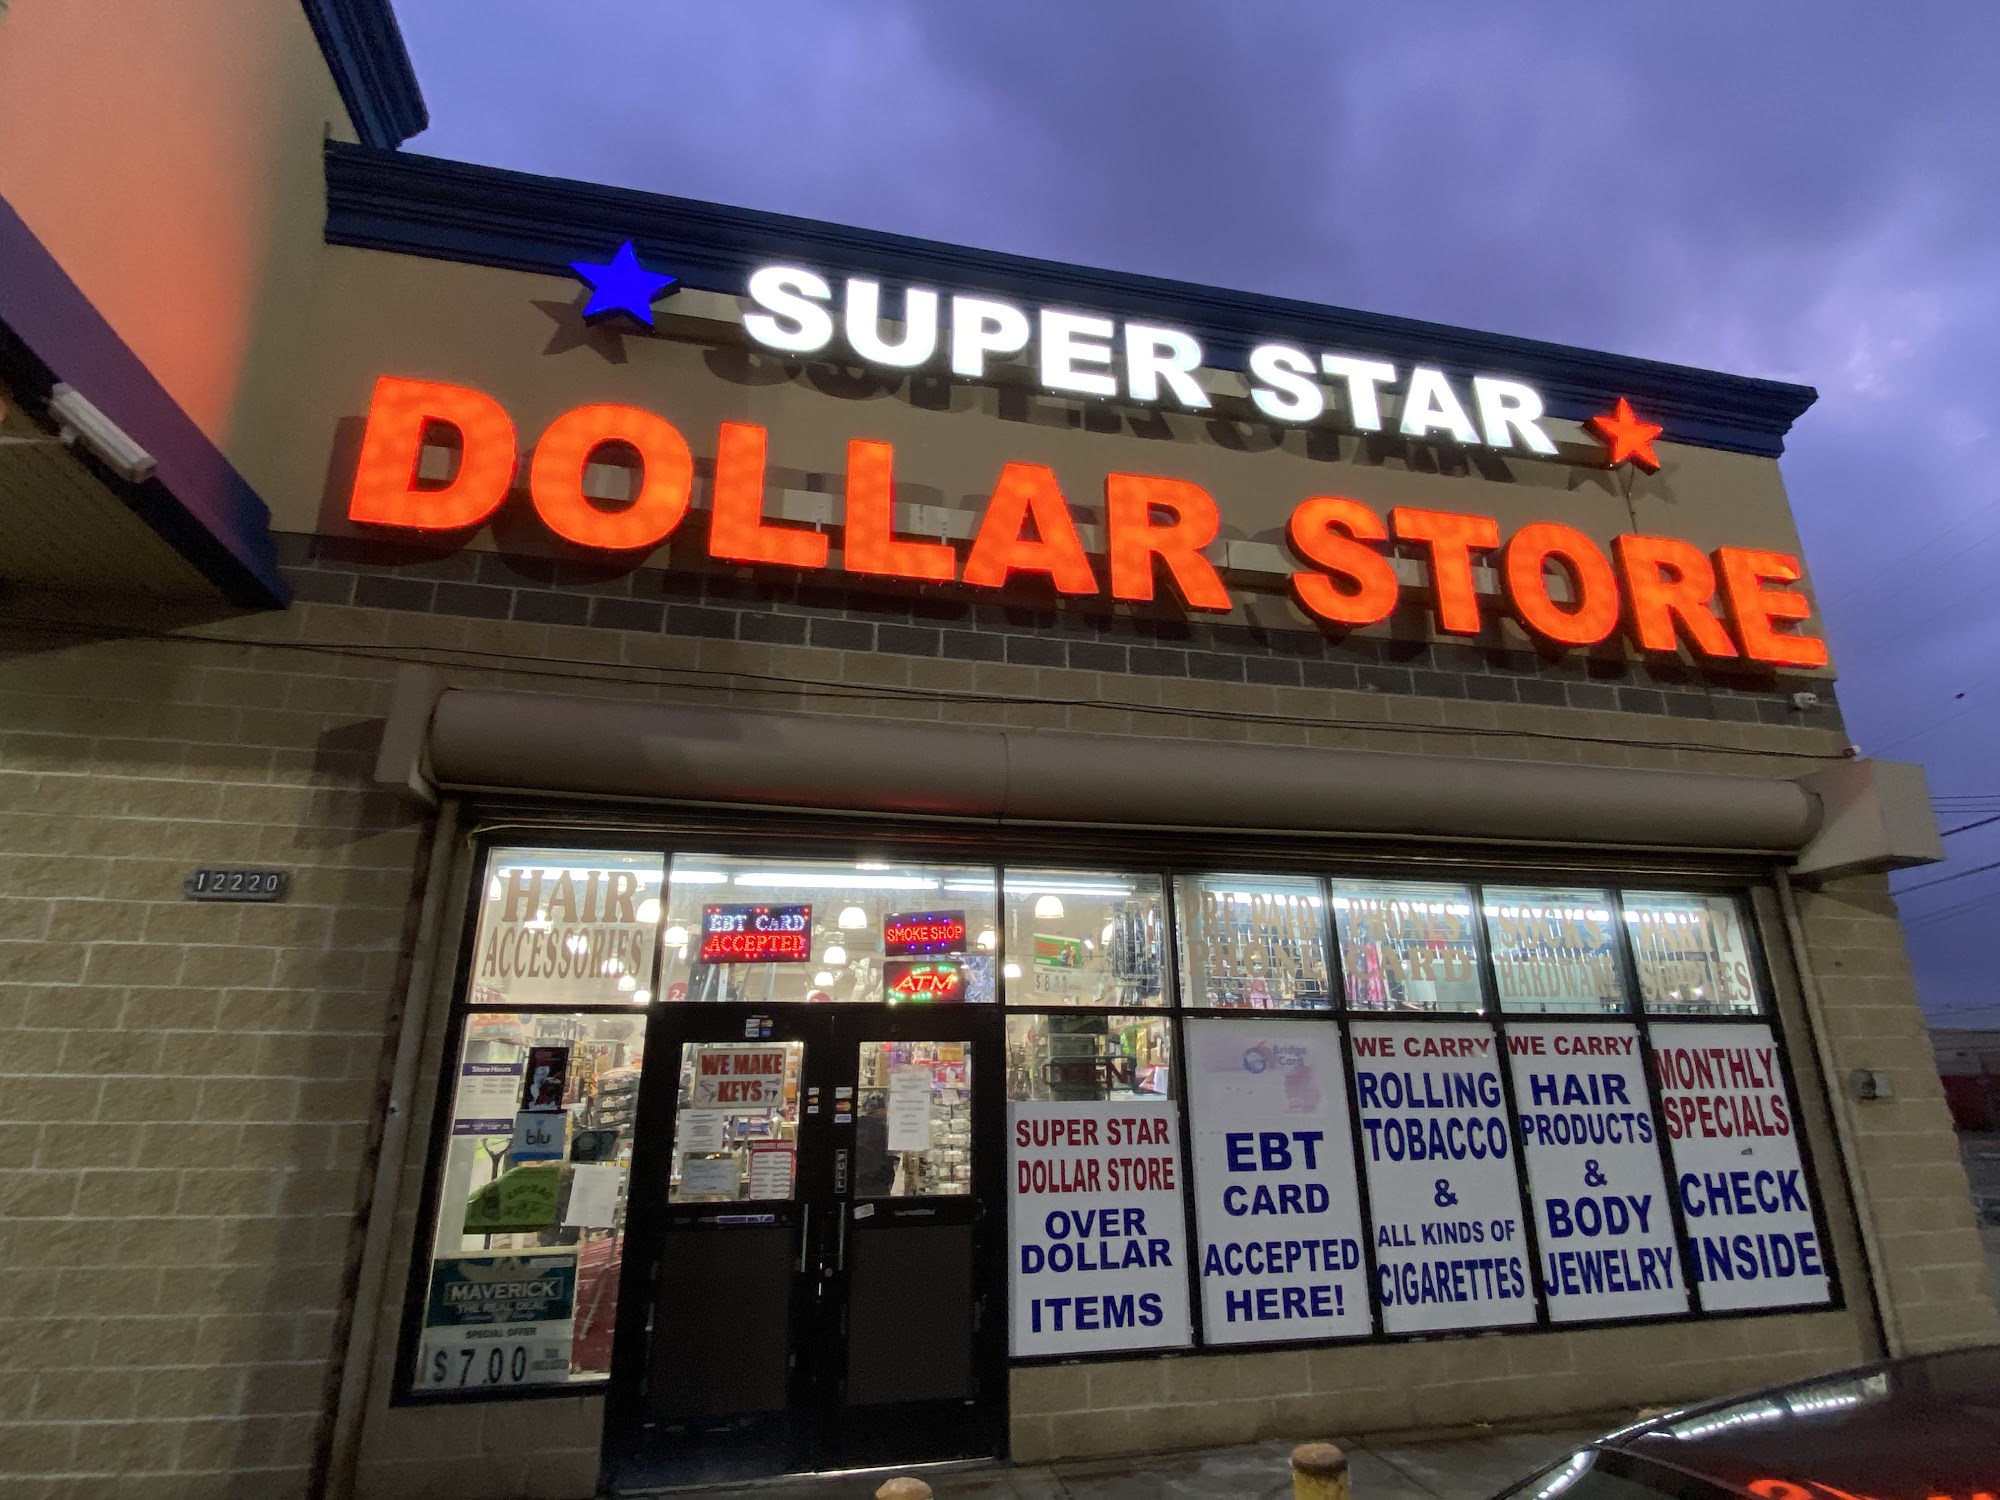 Super Star Dollar Store